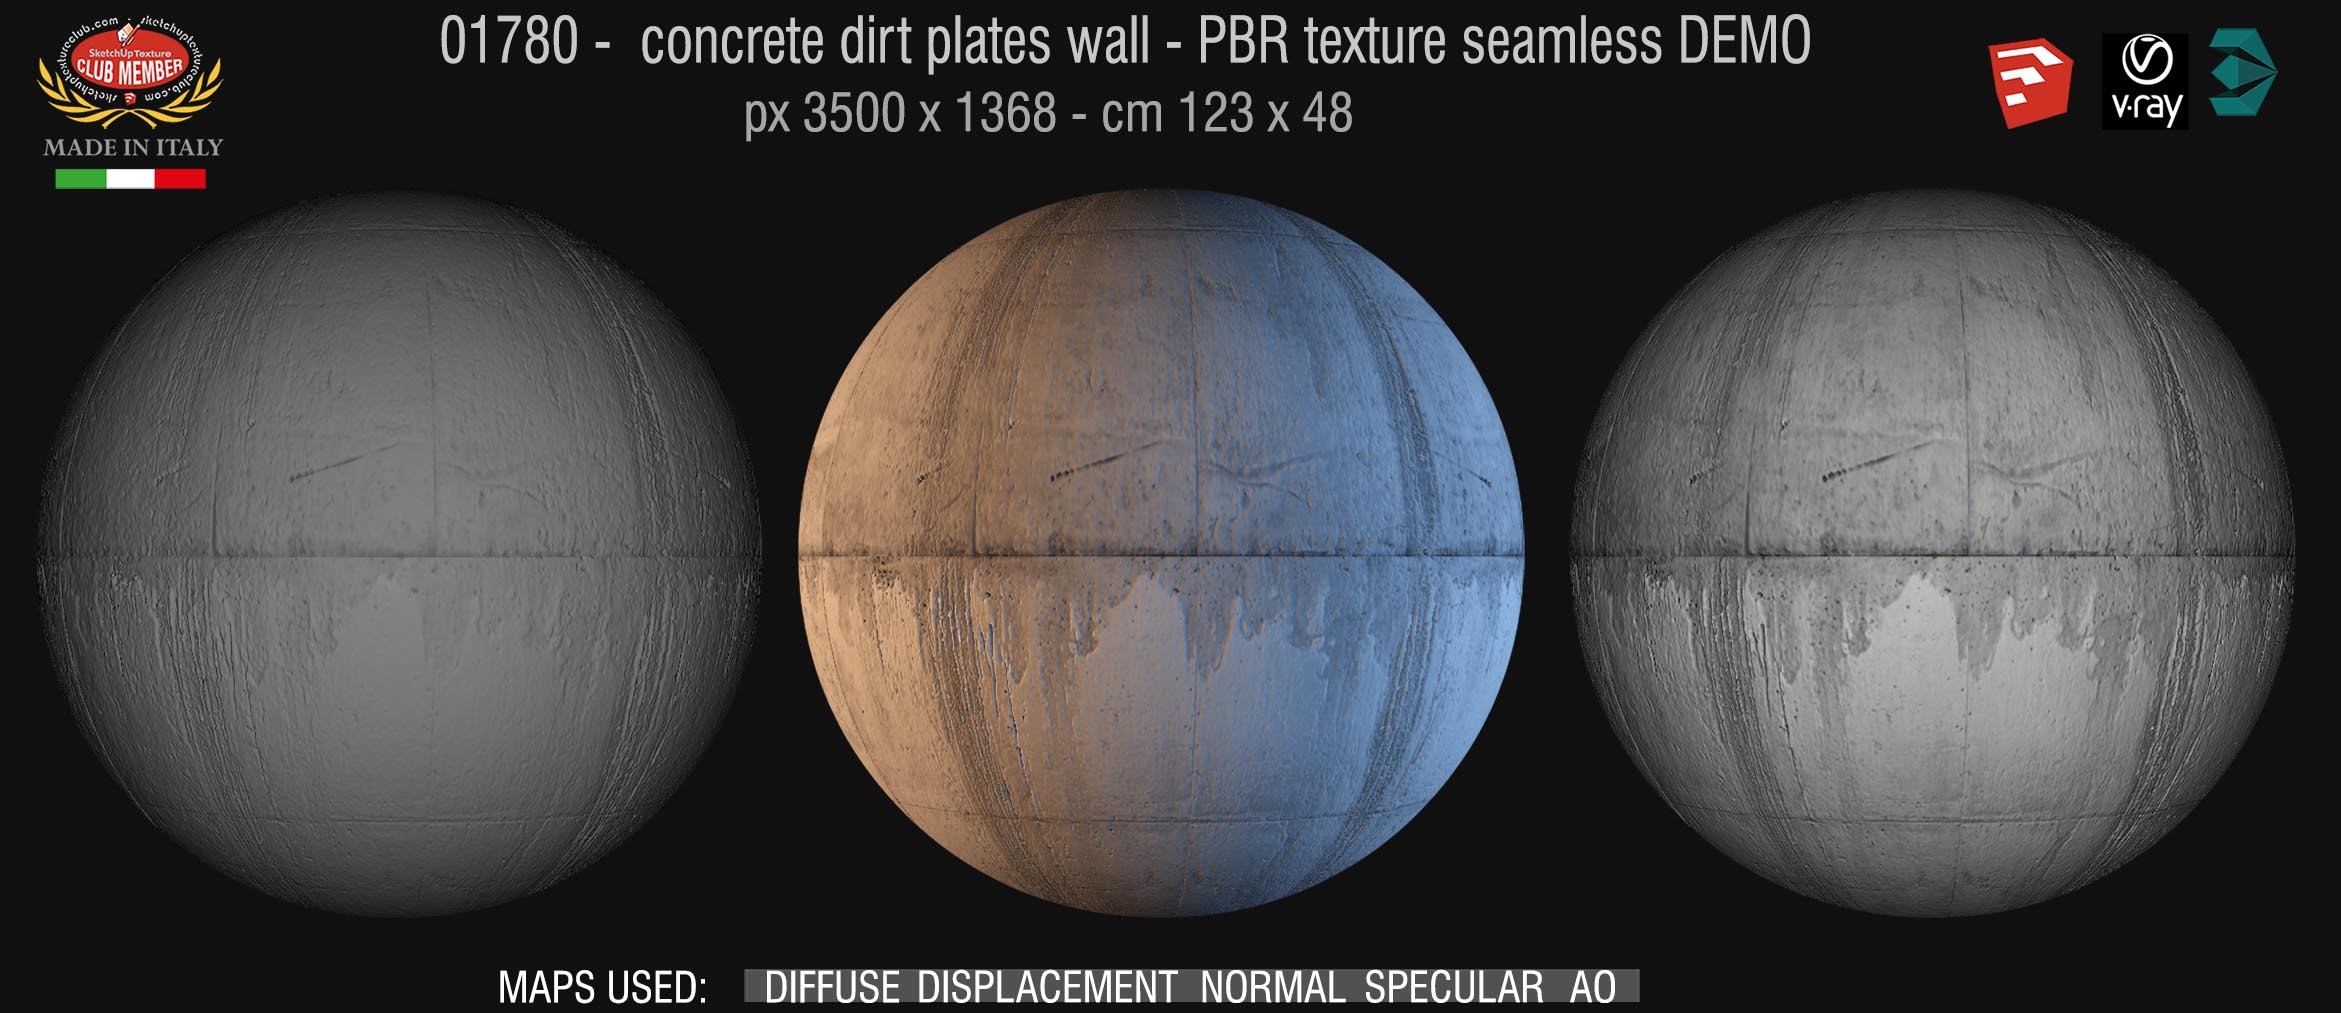 01780 concrete dirt plates wall PBR texture seamless DEMO